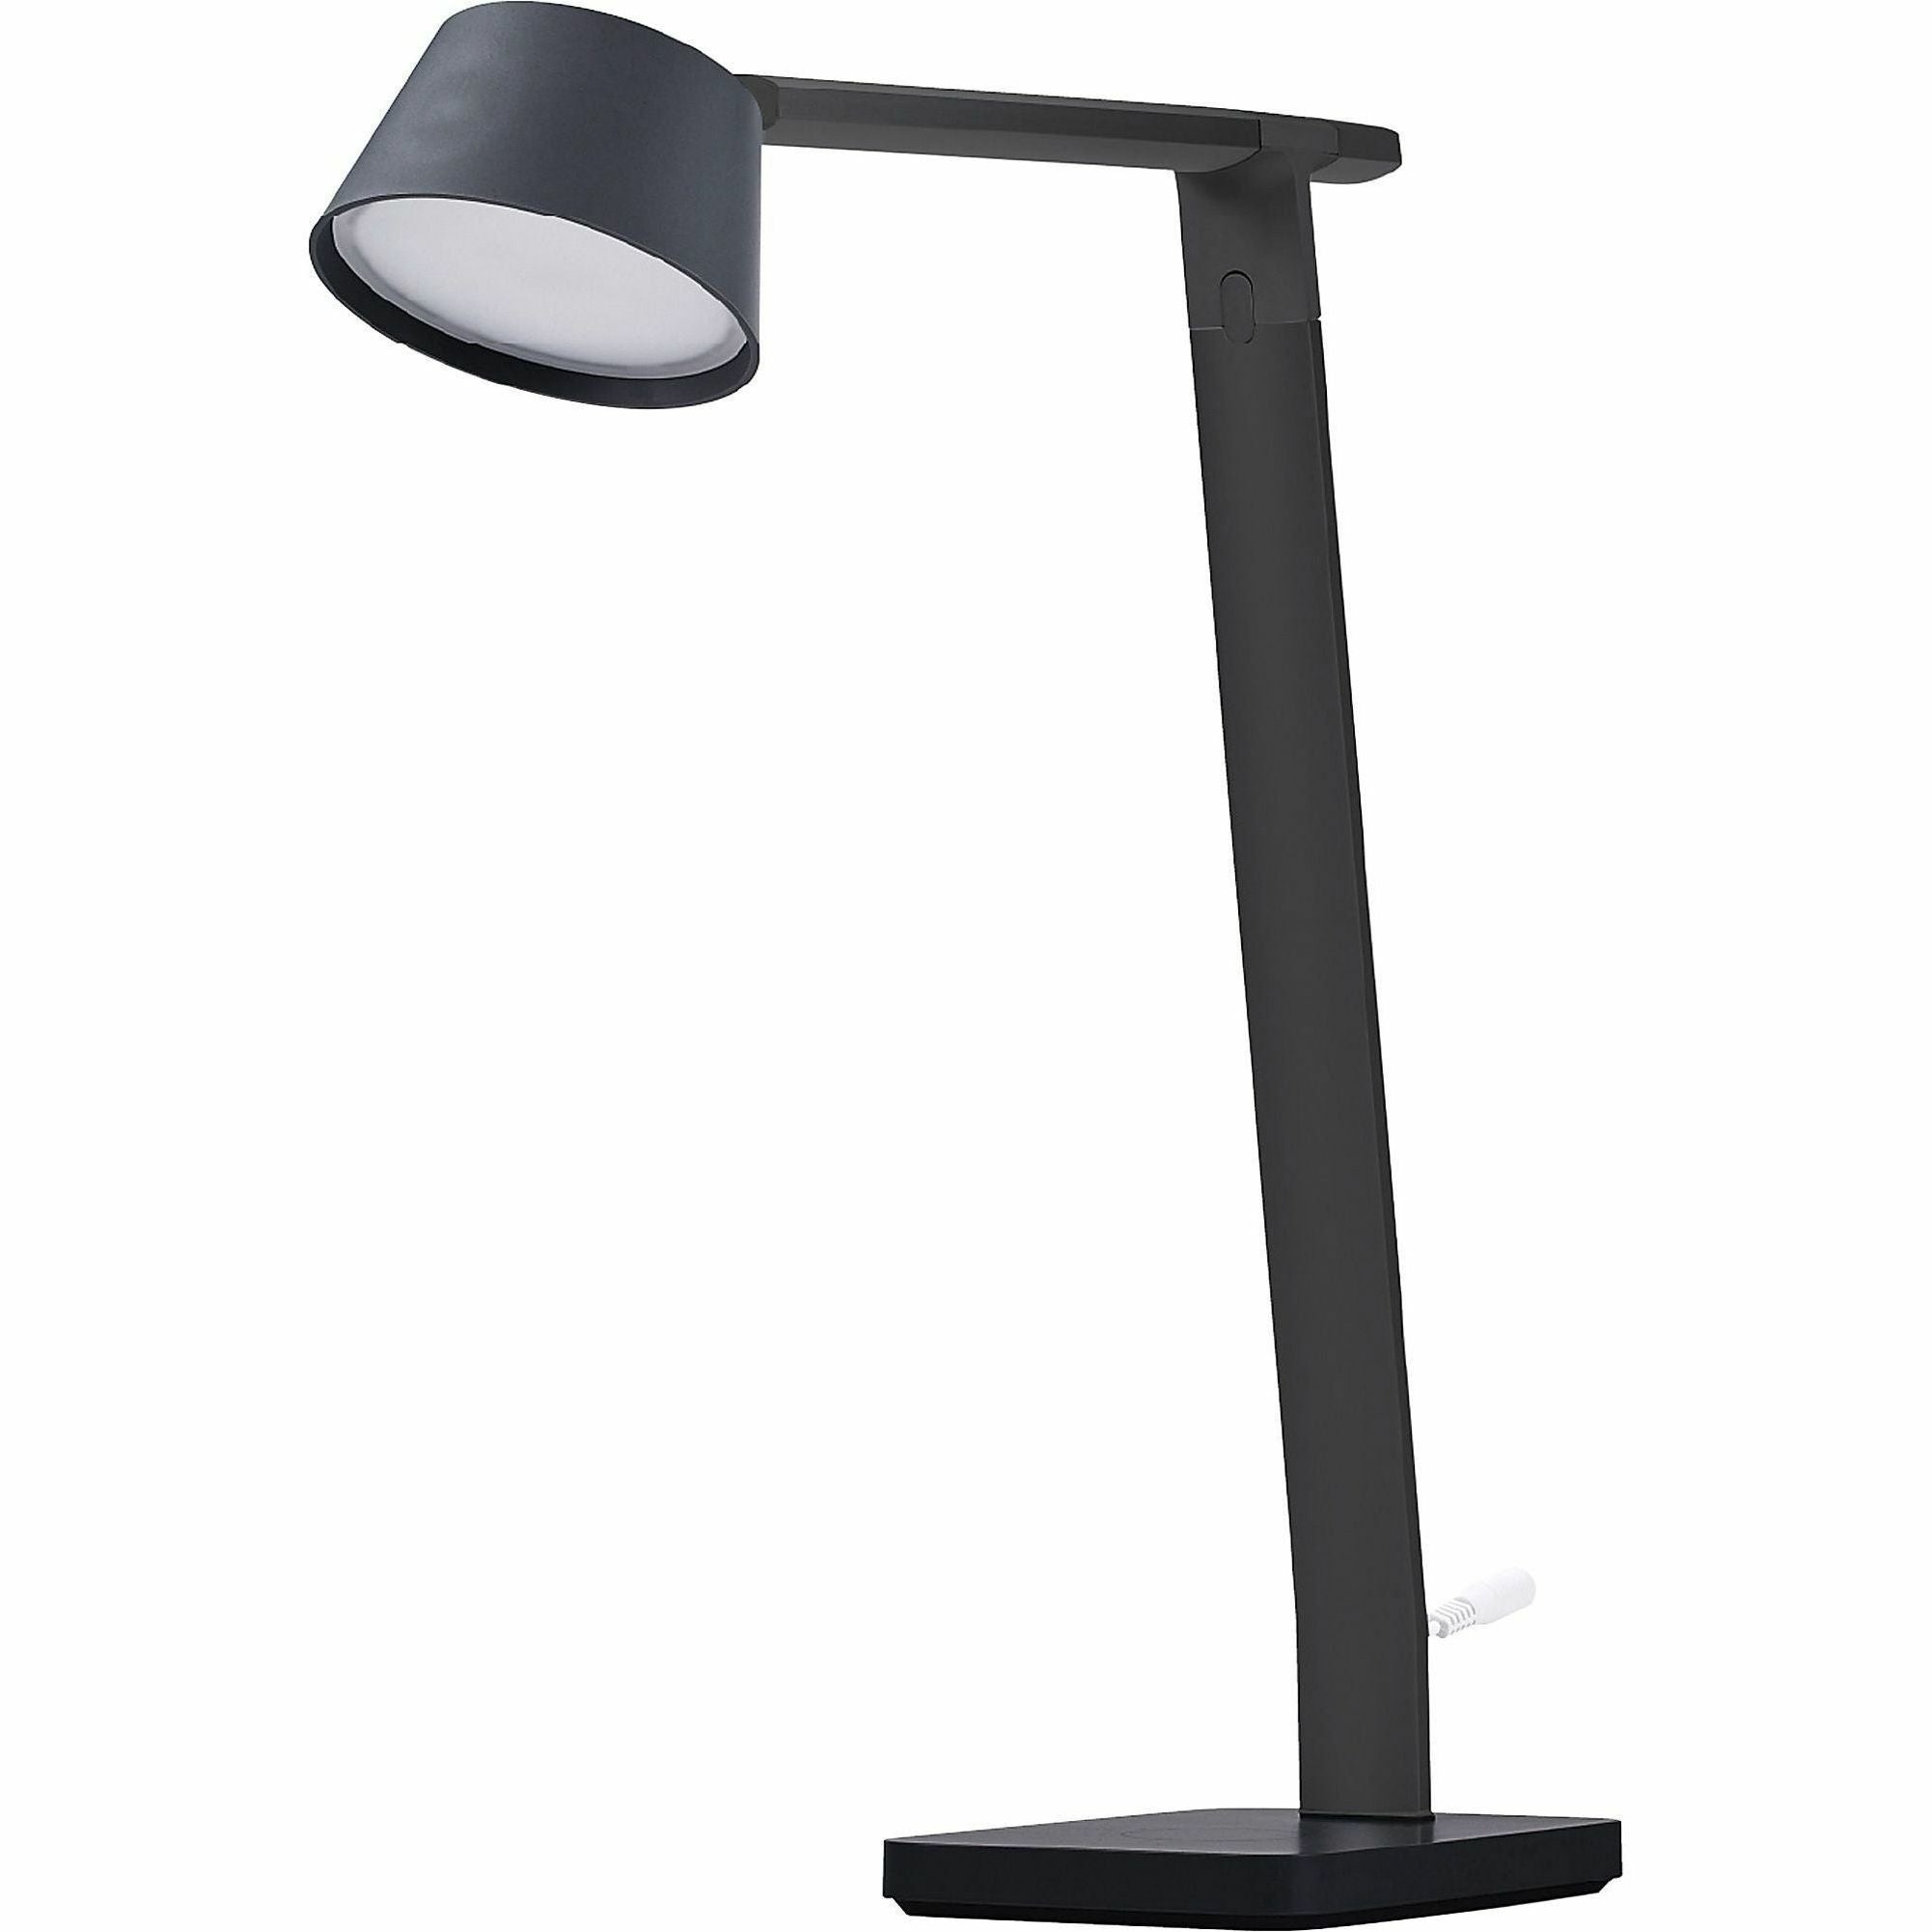 bostitch-verve-adjustable-led-desk-lamp-led-bulb-adjustable-dimmable-adjustable-brightness-clock-durable-wireless-charging-swivel-base-color-changing-mode-aluminum-desk-mountable-black-for-desk-alexa-supported_bos2200qismbk - 2